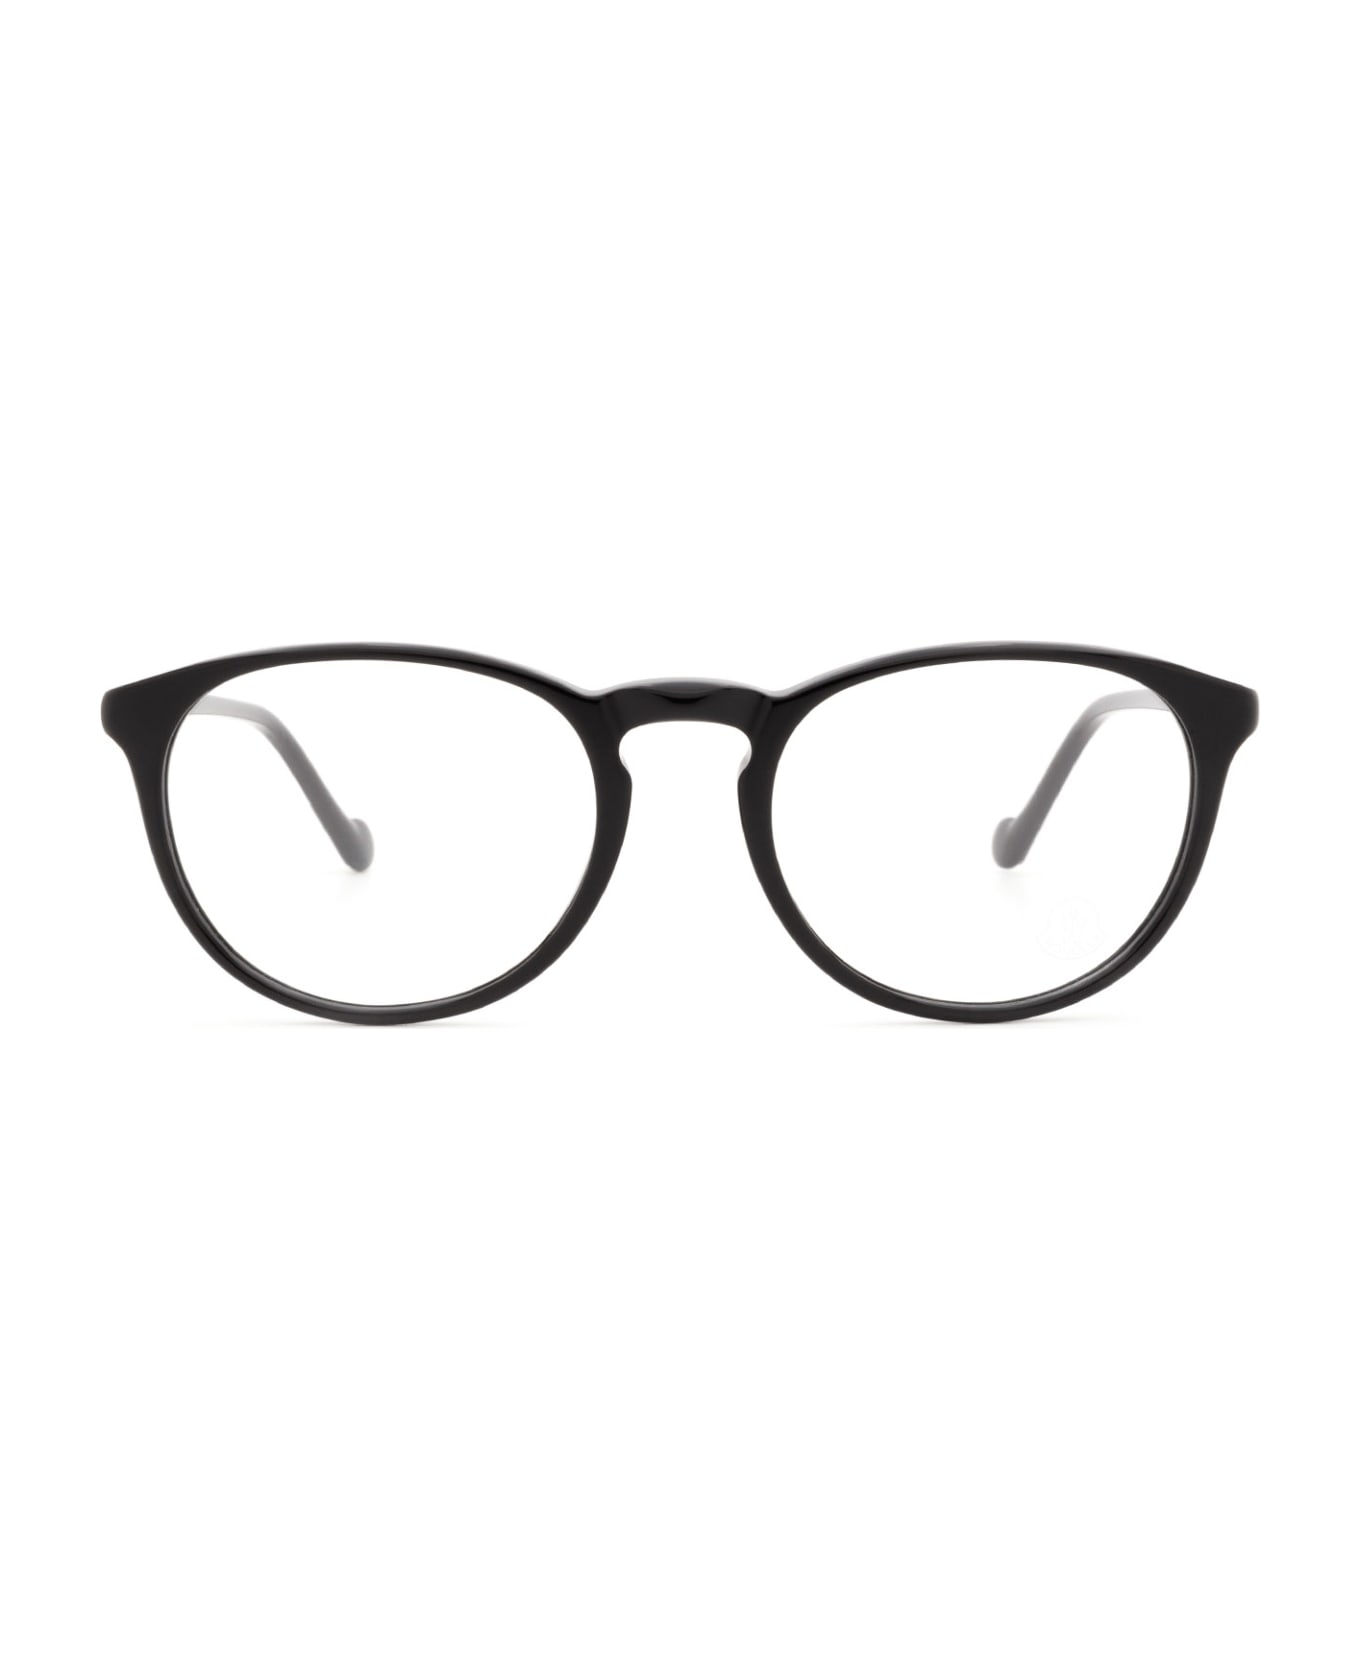 Moncler Eyewear Ml5104 Shiny Black Glasses - Shiny Black